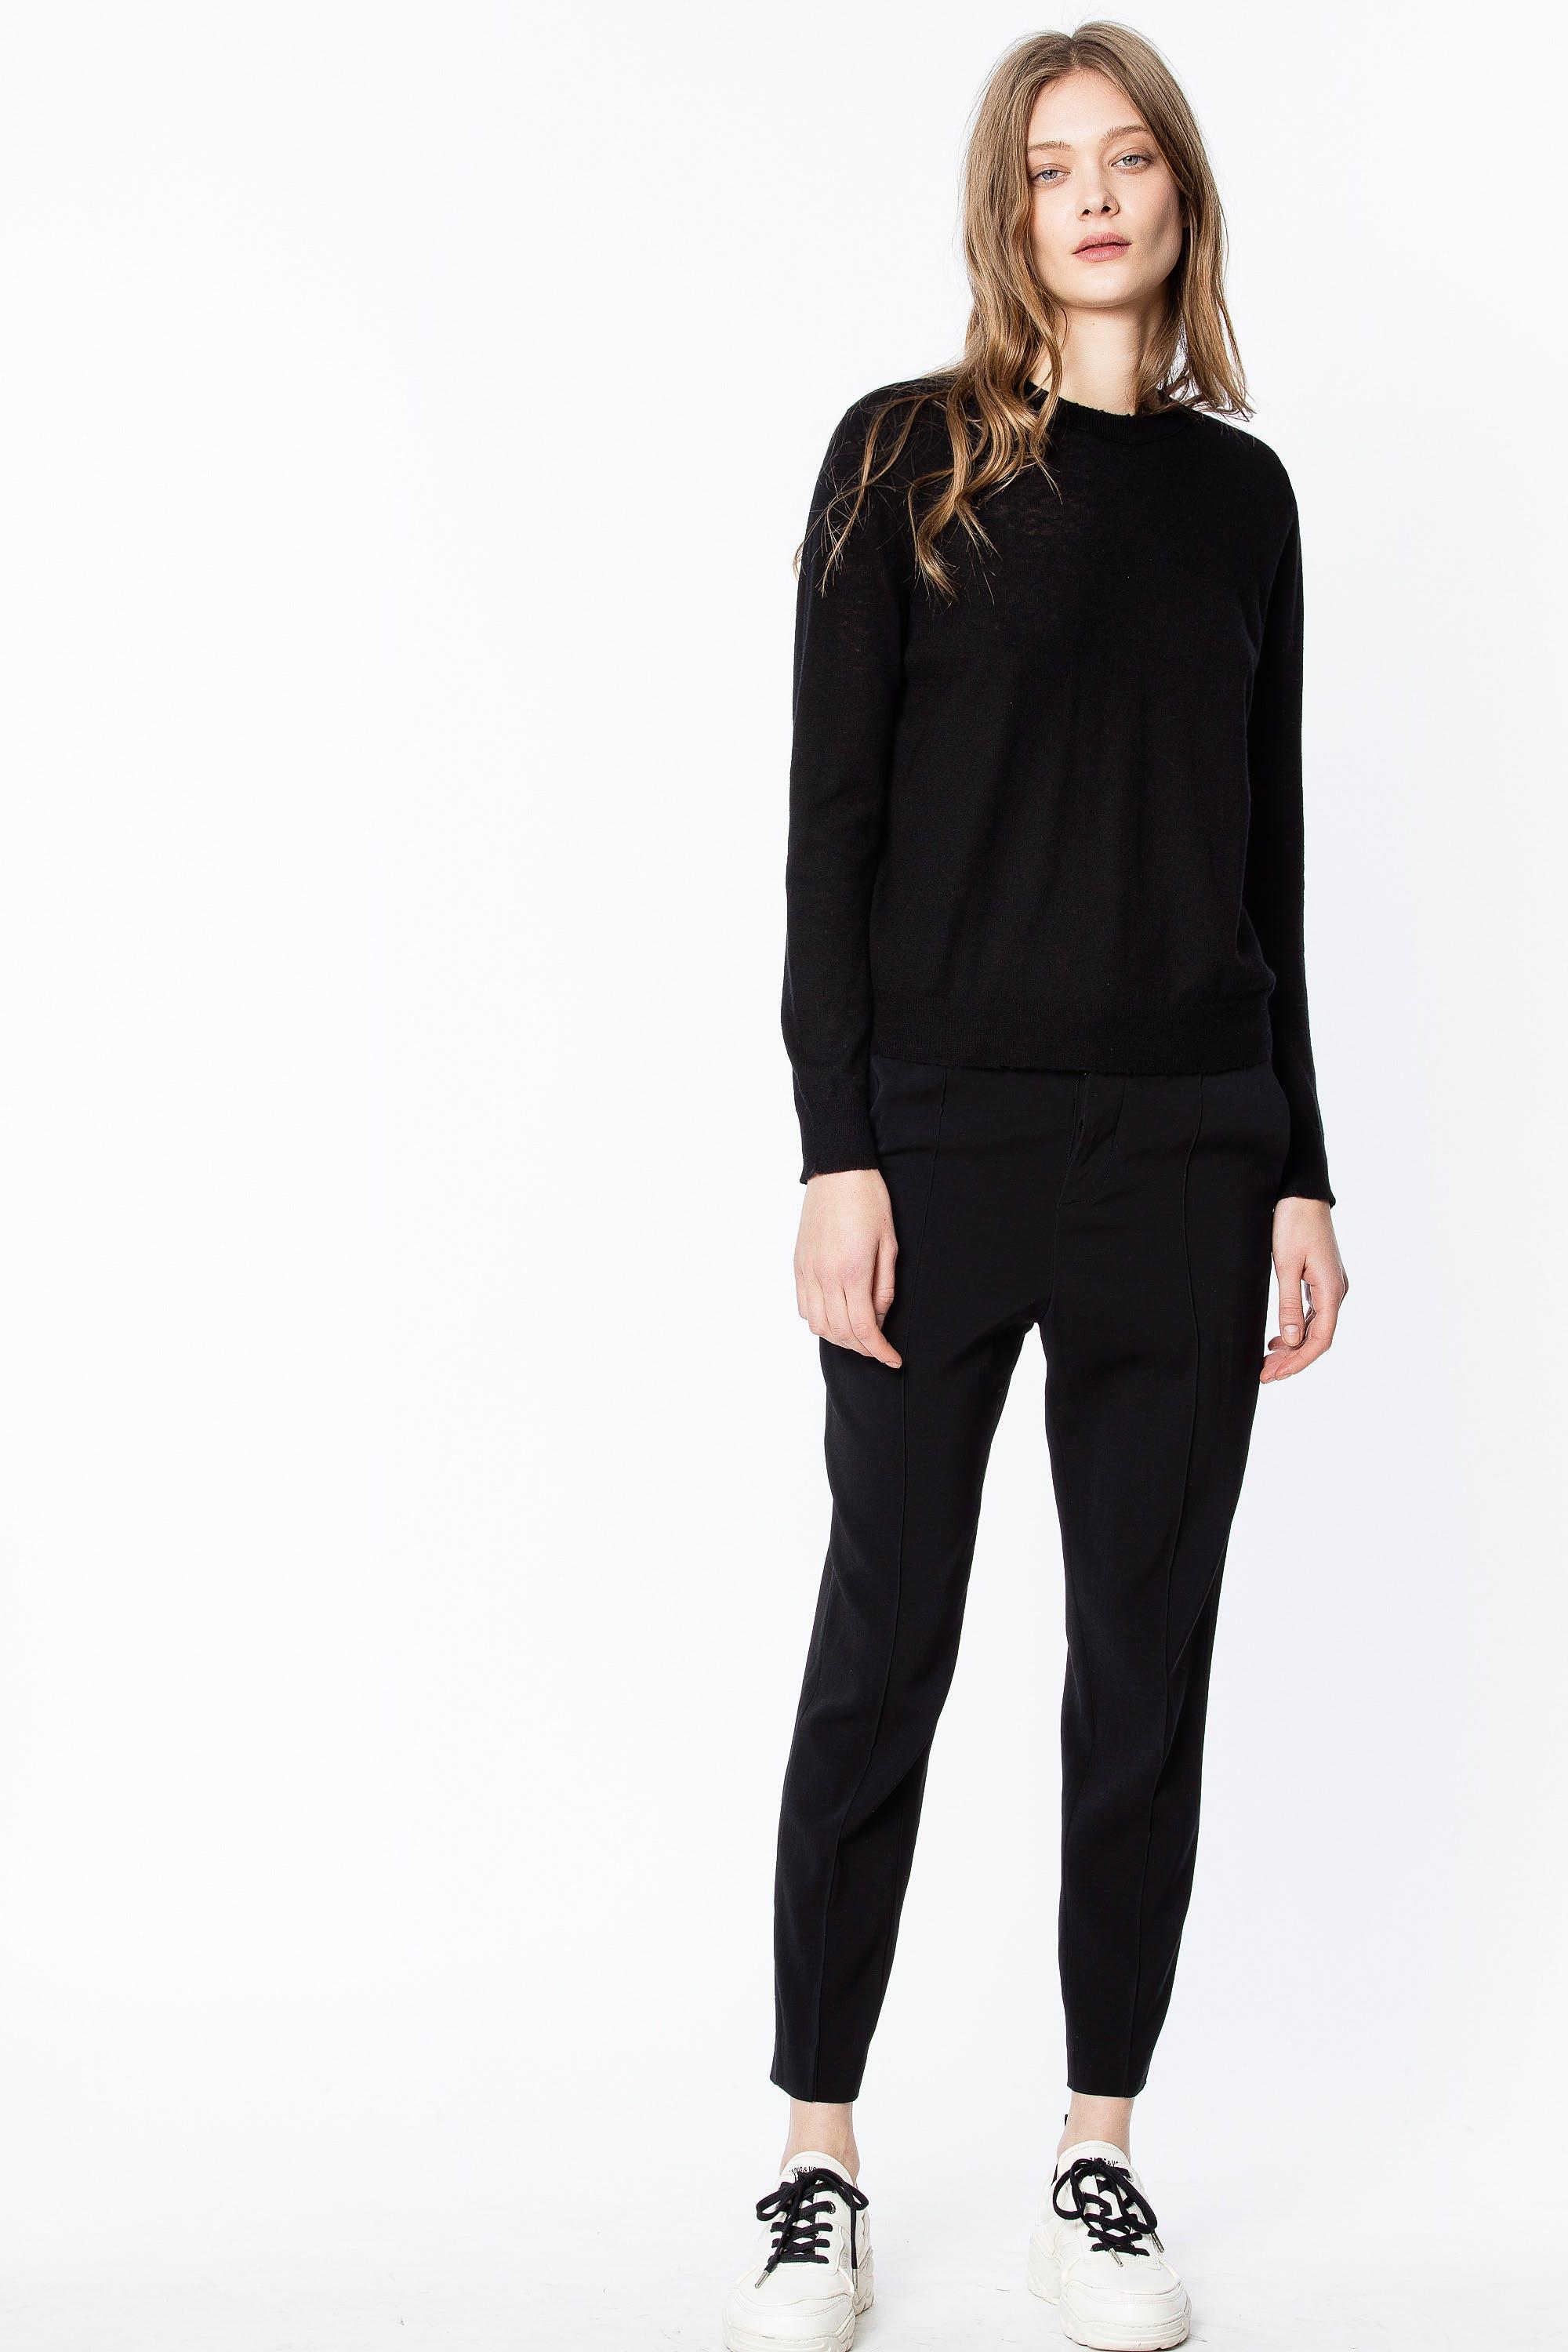 Zadig & Voltaire Emma Cashmere Sweater in Black - Lyst